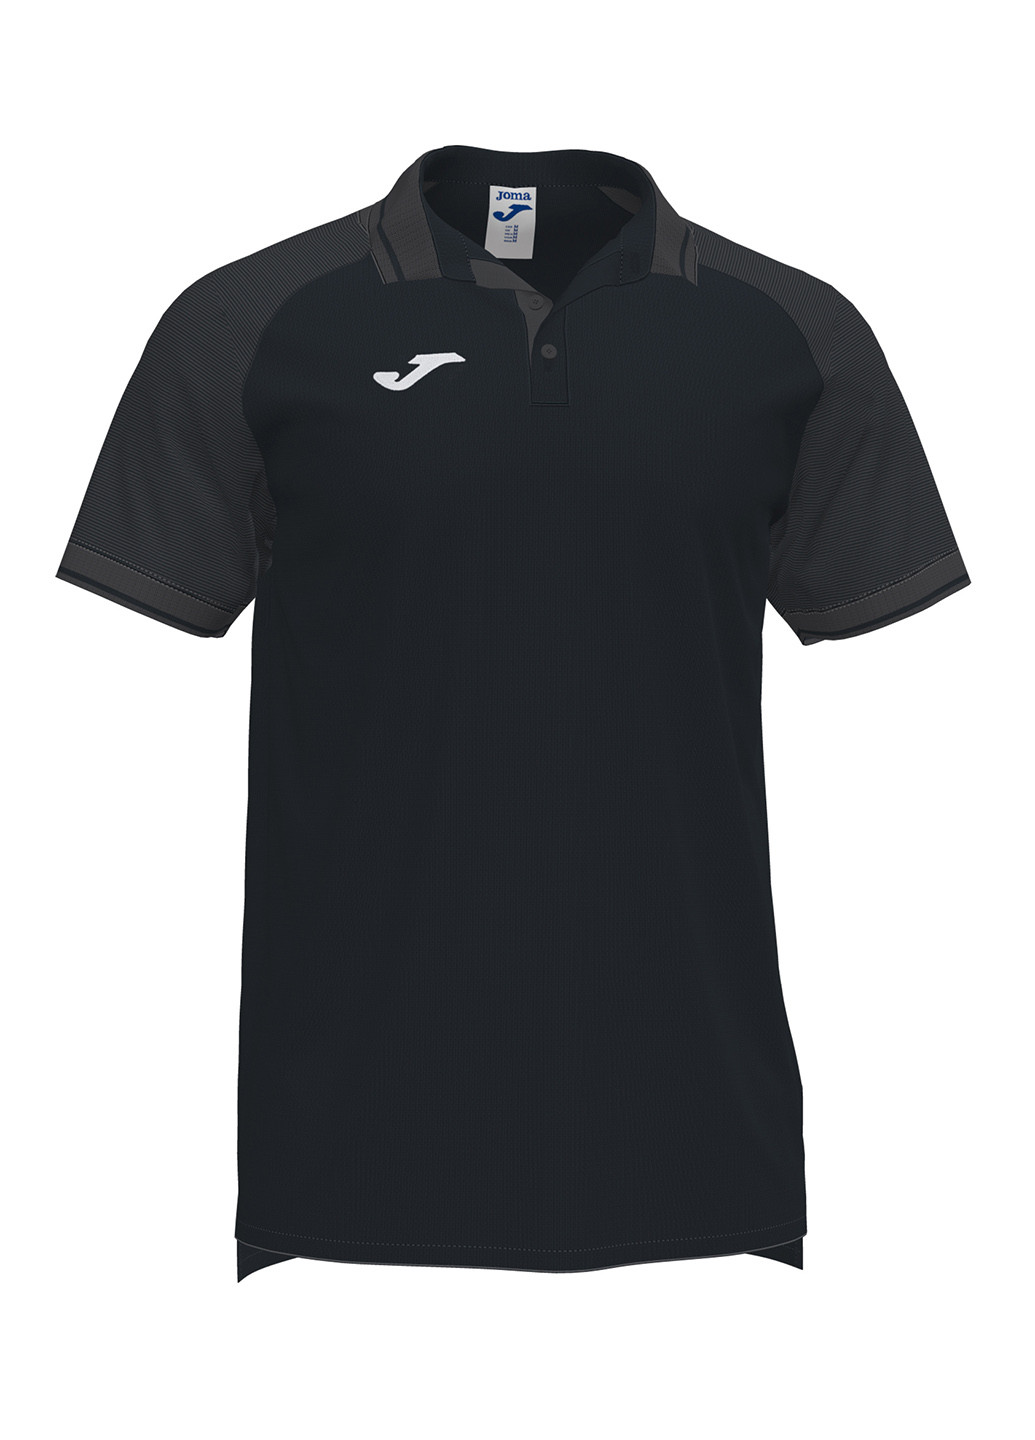 Черная футболка-поло для мужчин Joma однотонная